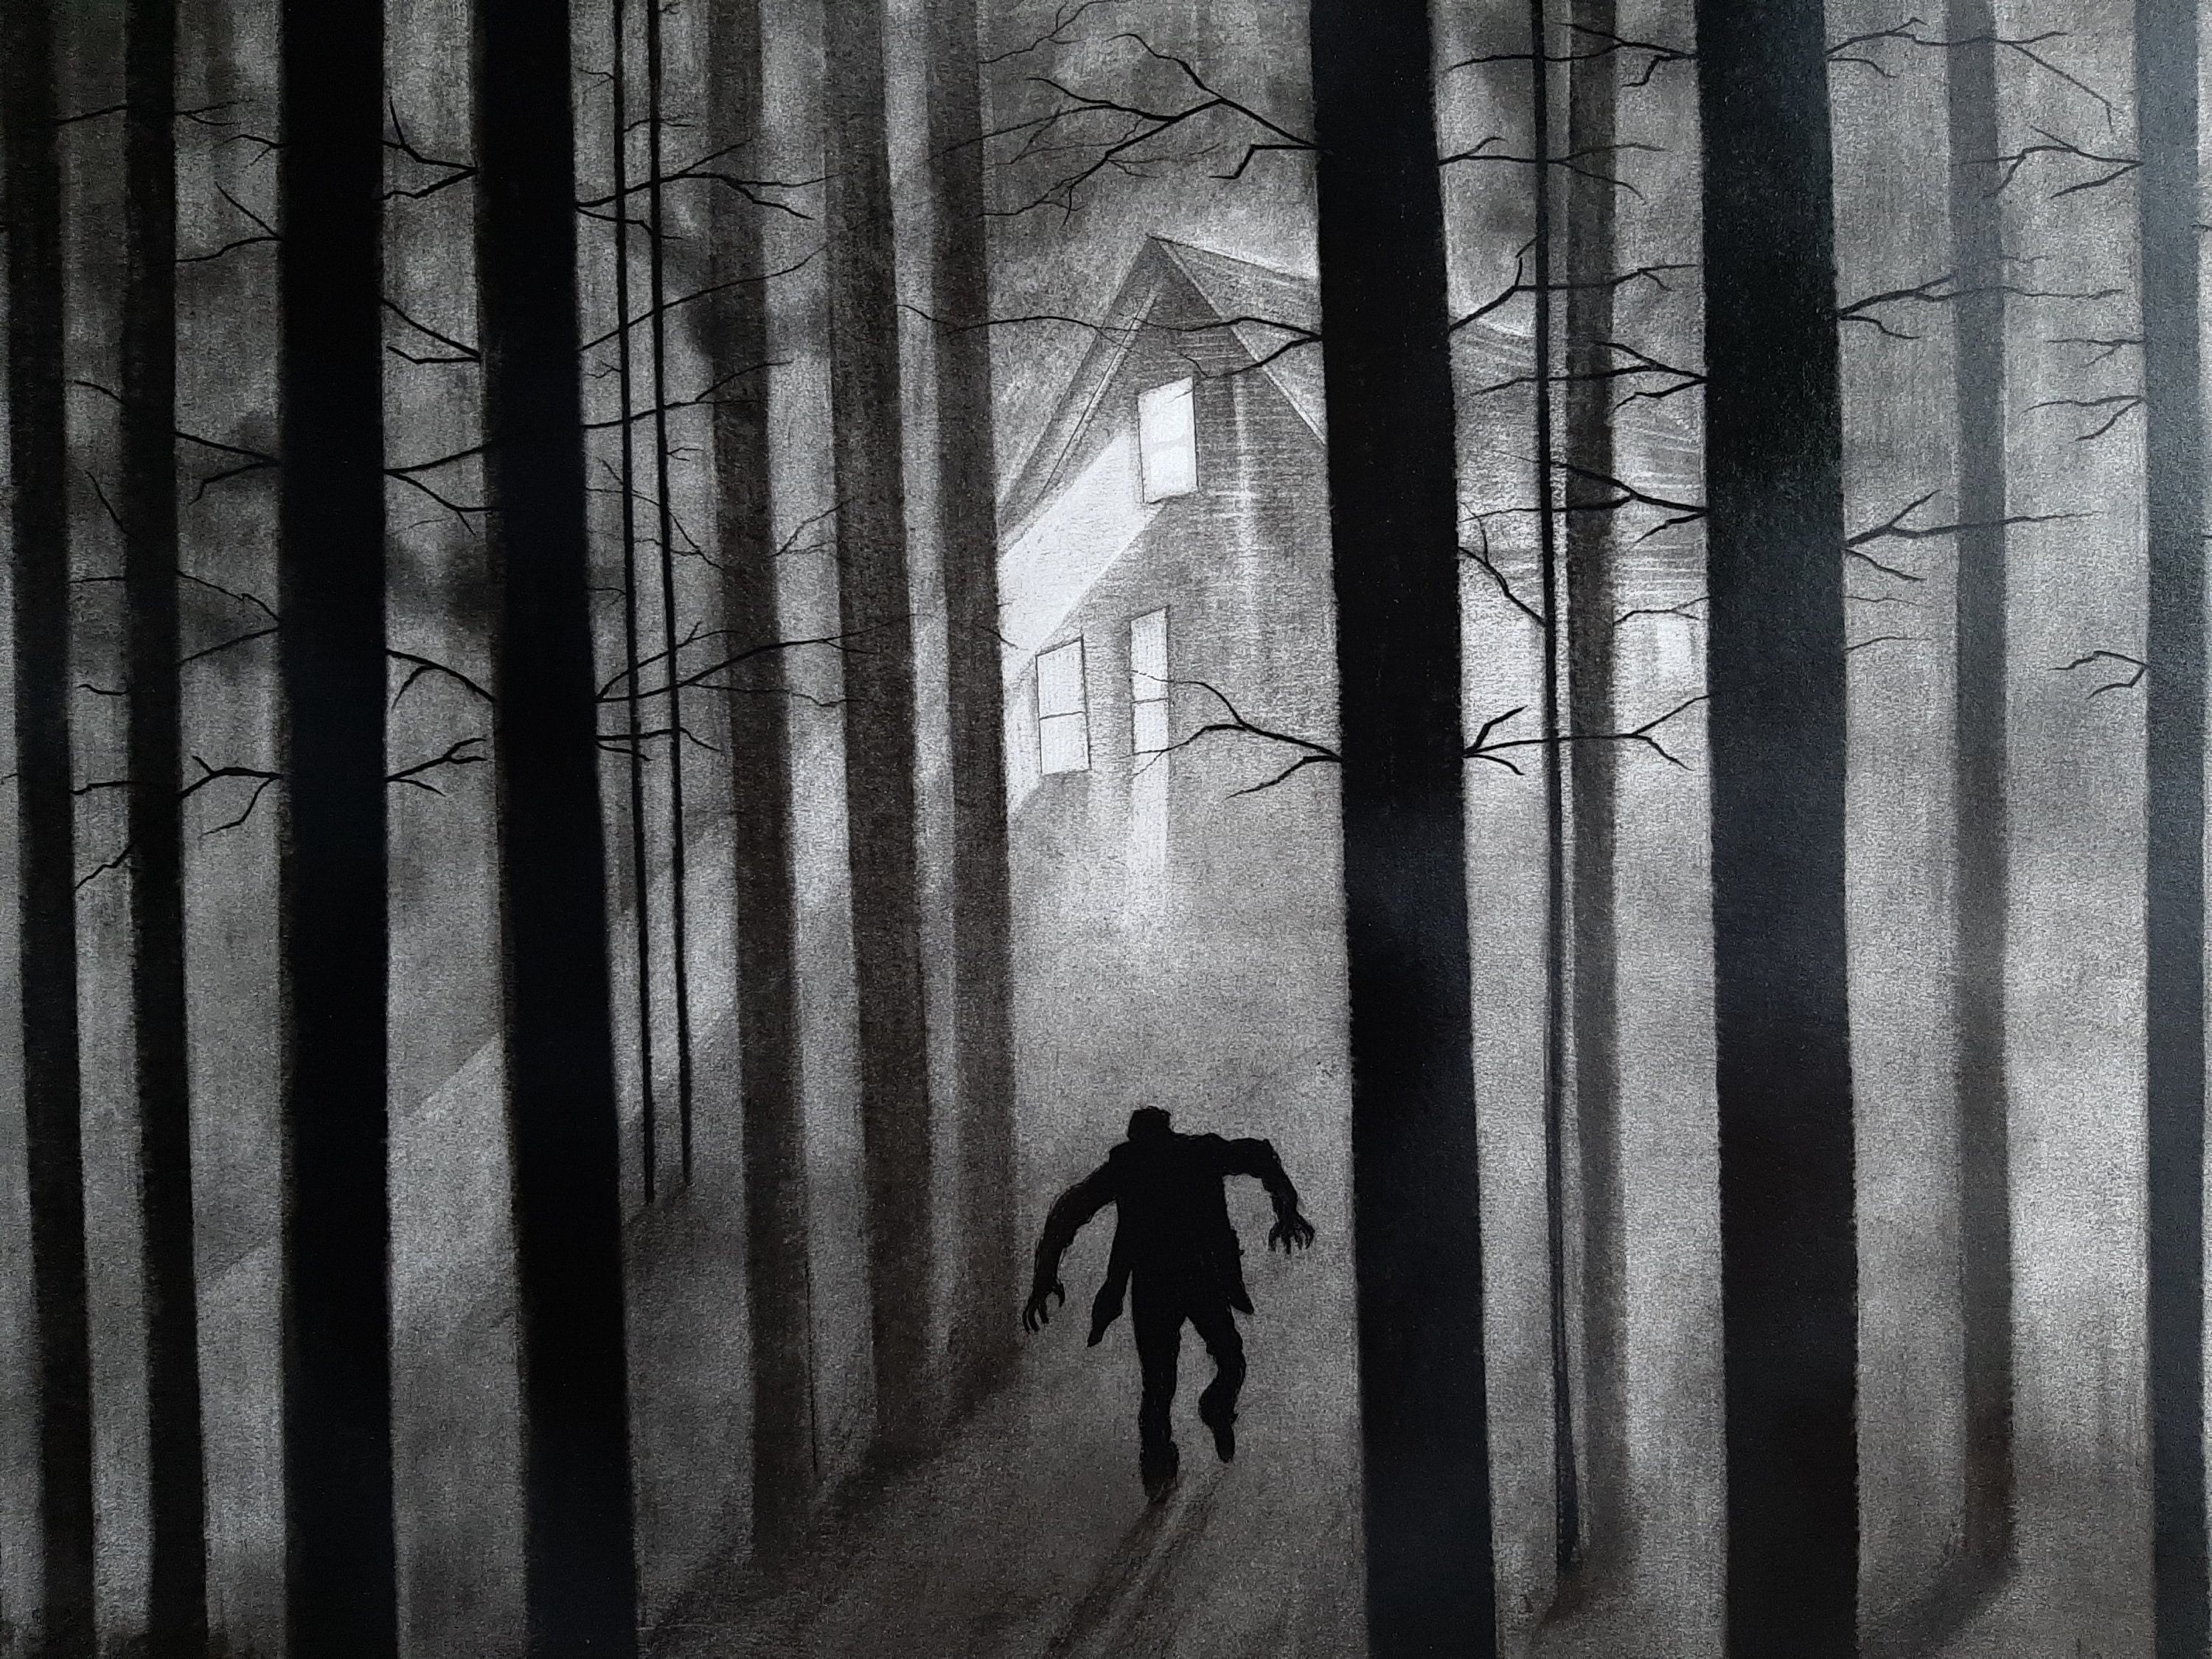  1-11x14 Through the Fog - Charcoal Drawing - Original Landscape  Art - Dark Forest Home Decor - Black & White Landscape - Fine Art and  Illustration - Gift Idea : Handmade Products